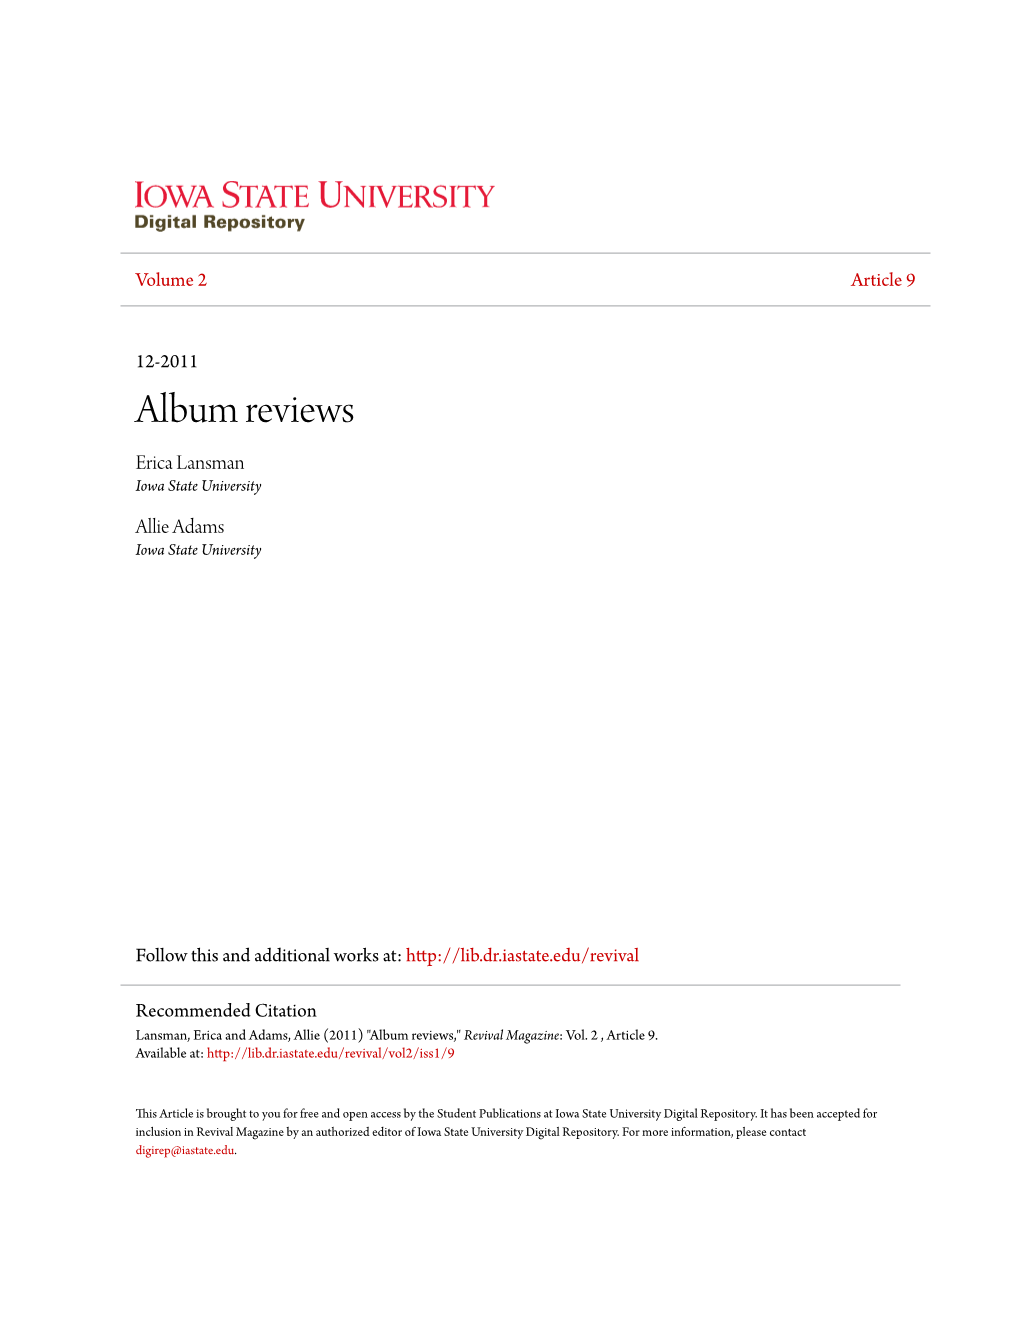 Album Reviews Erica Lansman Iowa State University